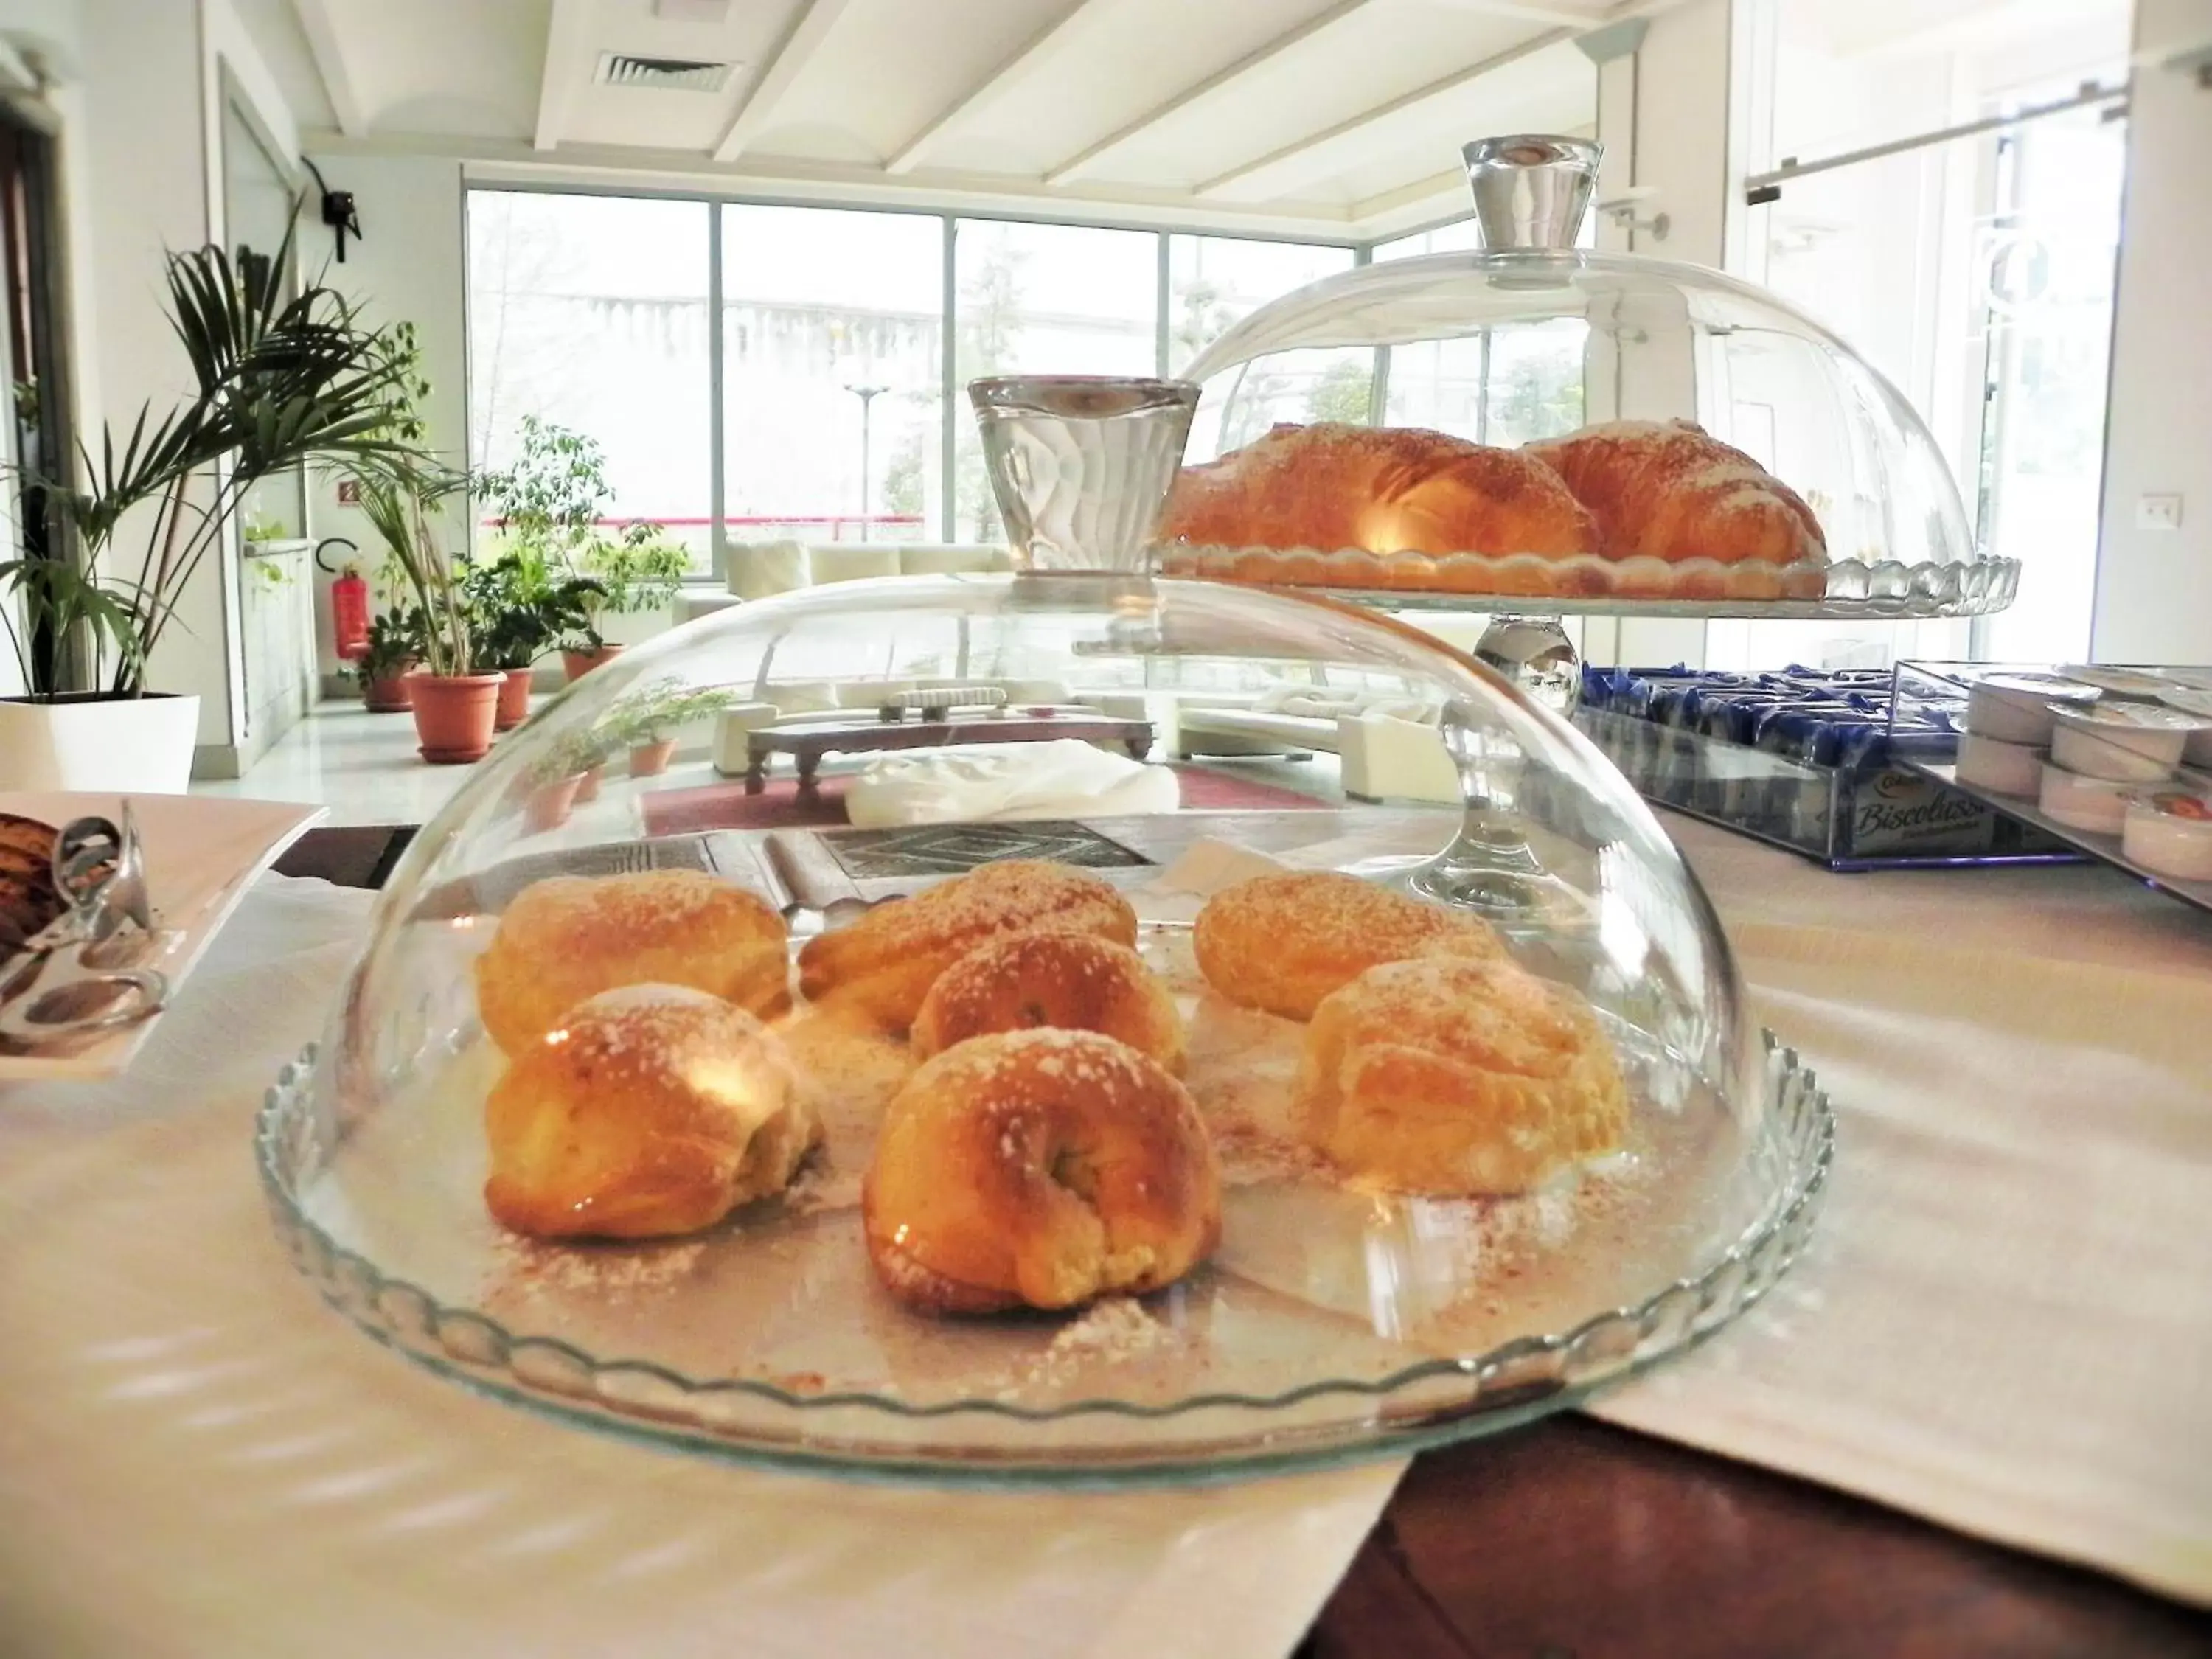 Day, Breakfast in Torreata Hotel & Residence